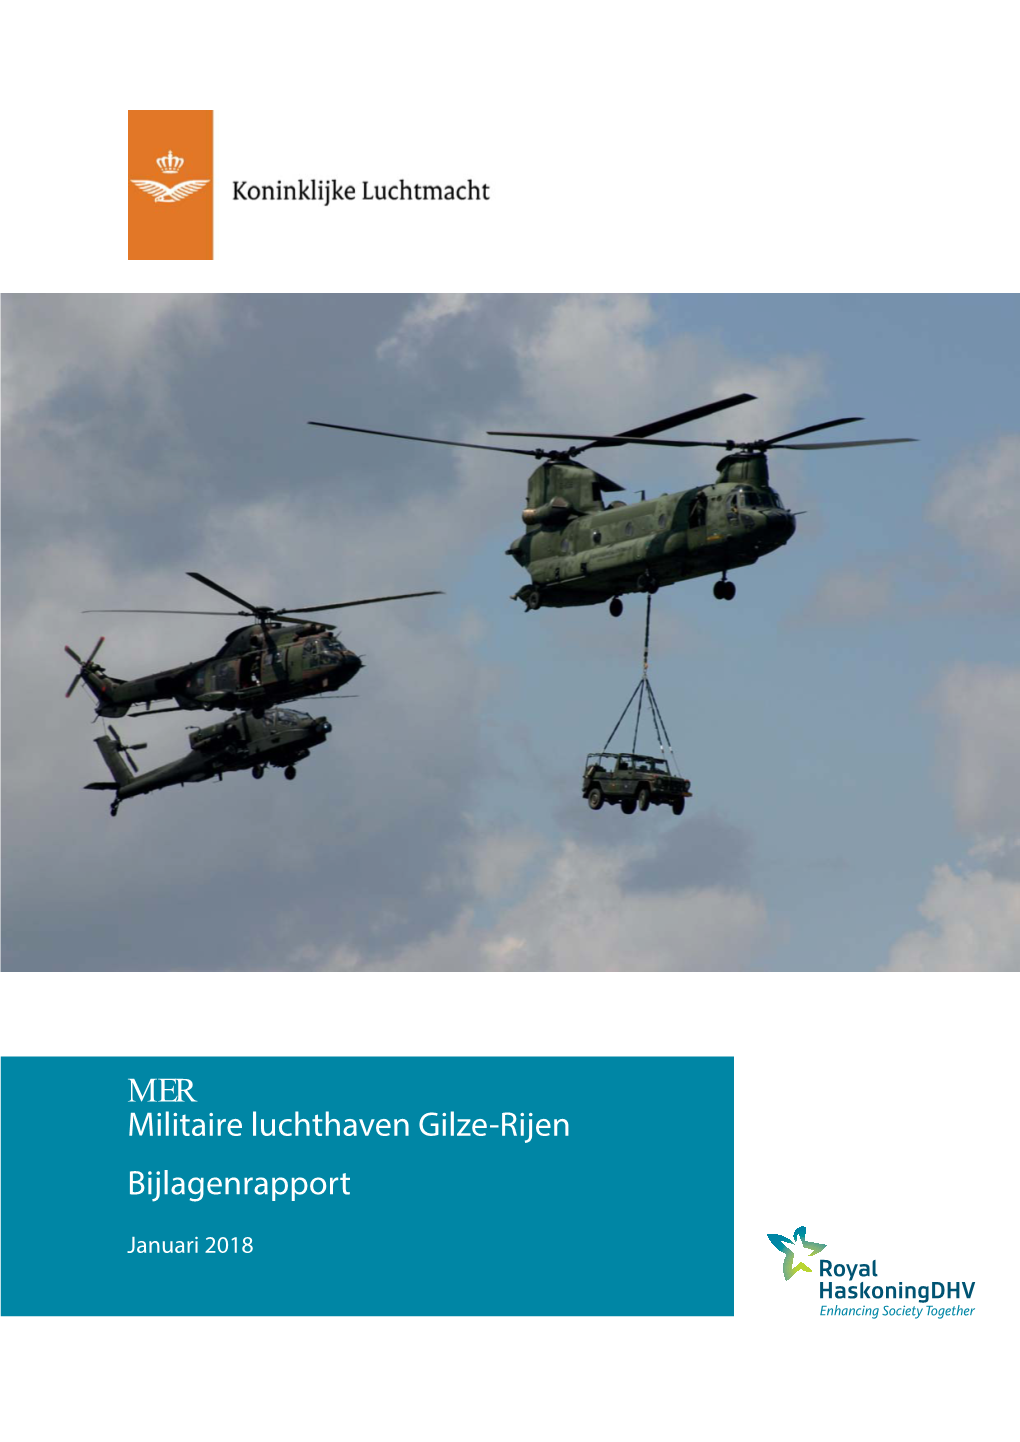 Bijlagenrapport MER Militaire Luchthaven Gilze-Rijen